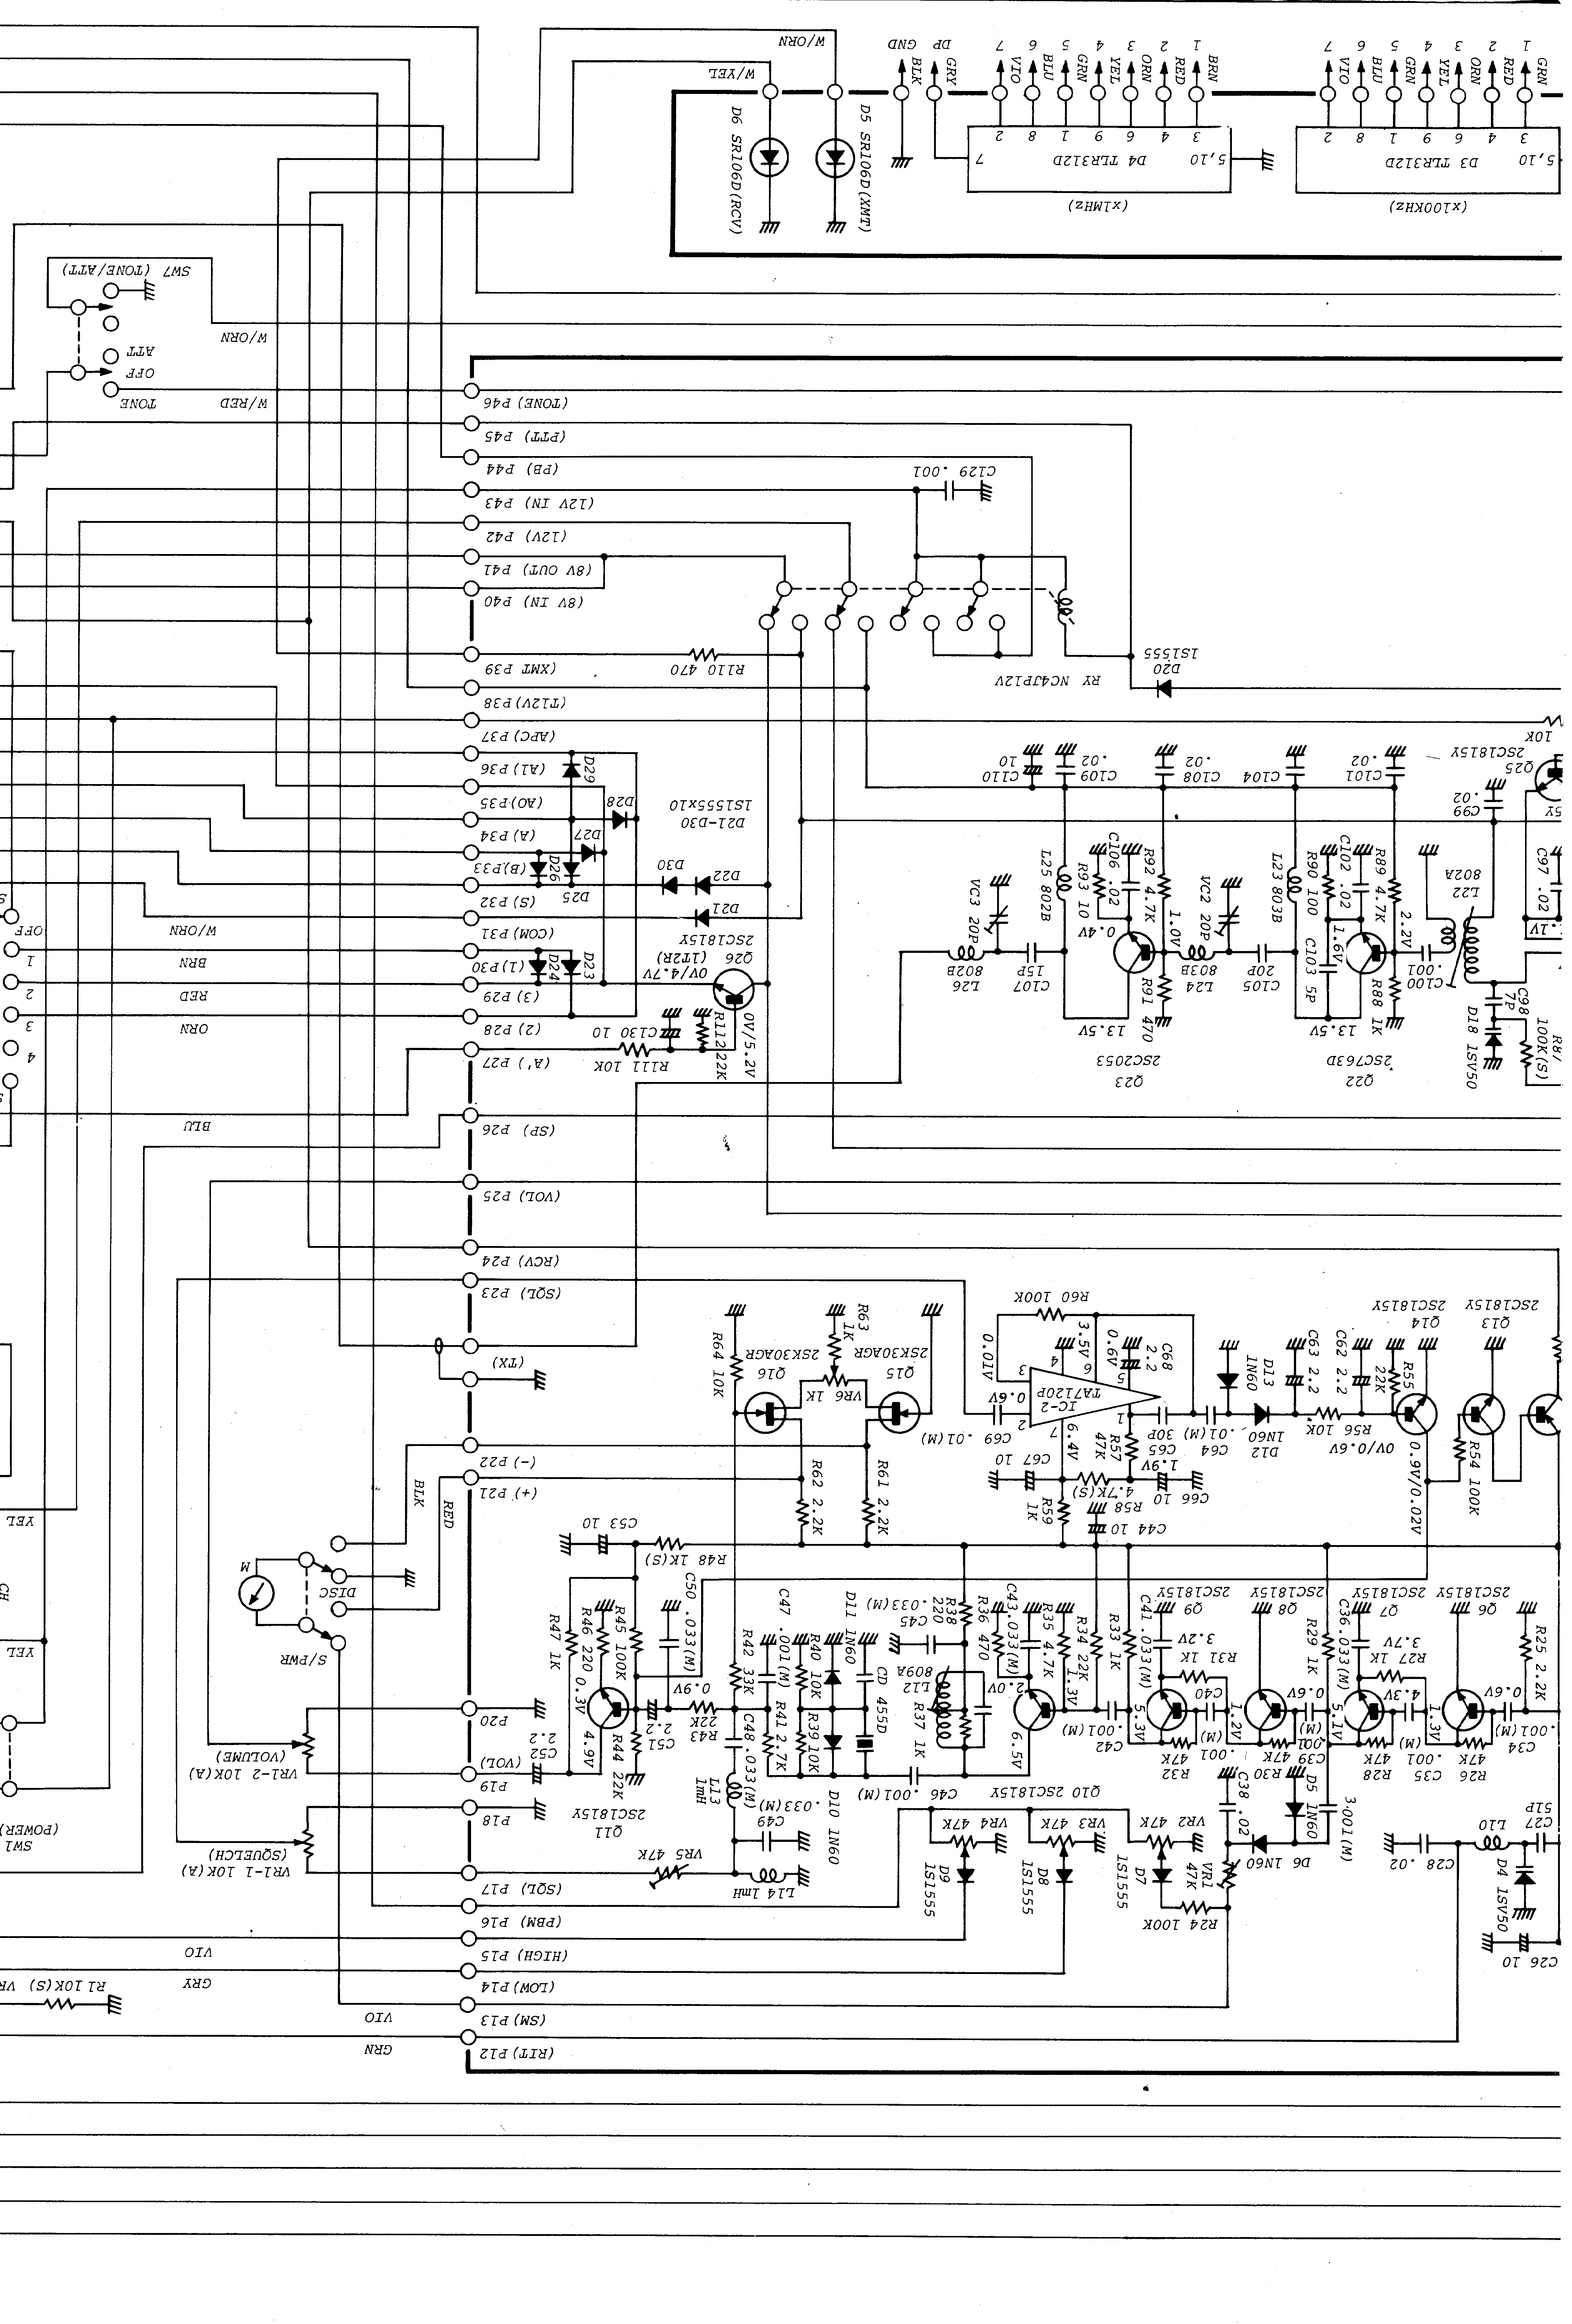 [DIAGRAM] Chevy Llv Wiring Diagram FULL Version HD Quality Wiring